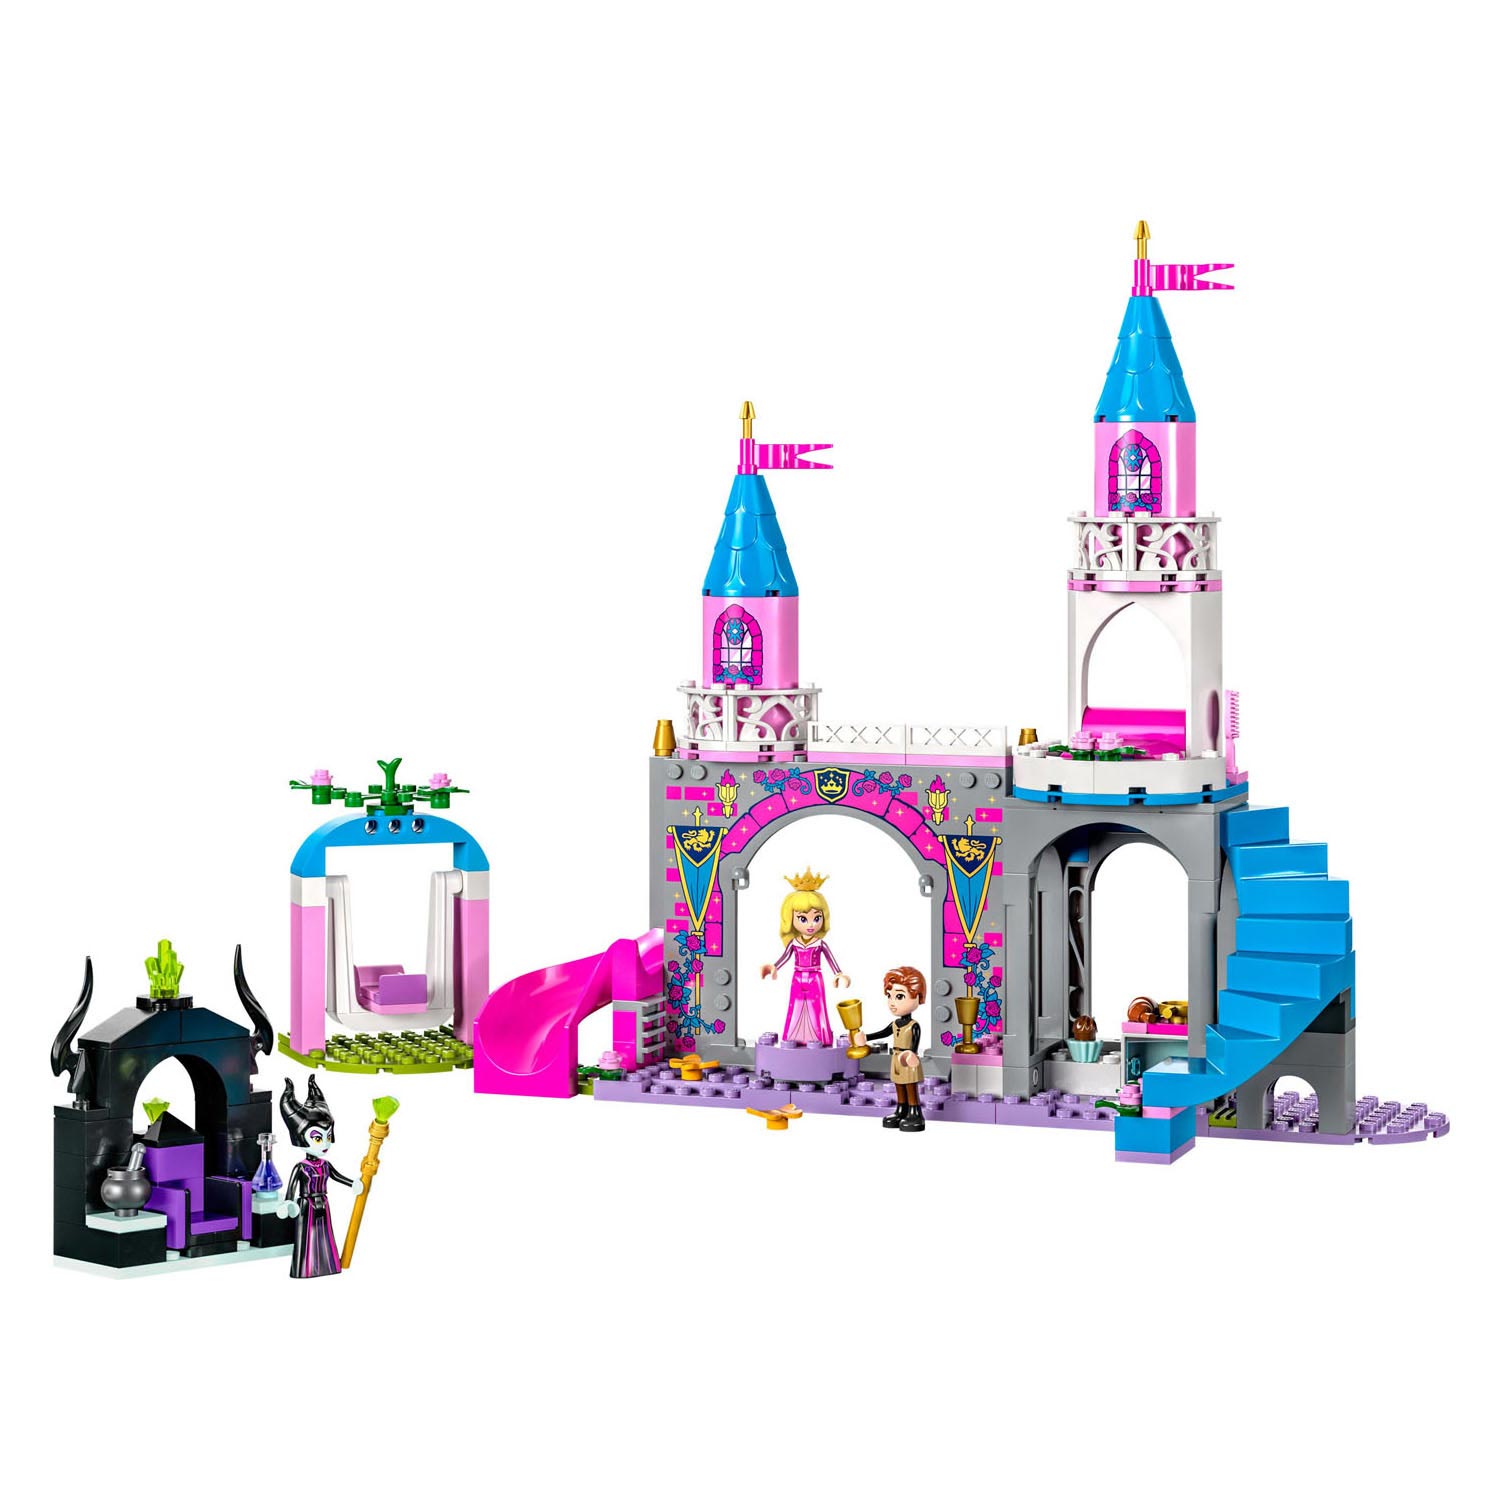 LEGO Disney 43211 Aurora-Schloss